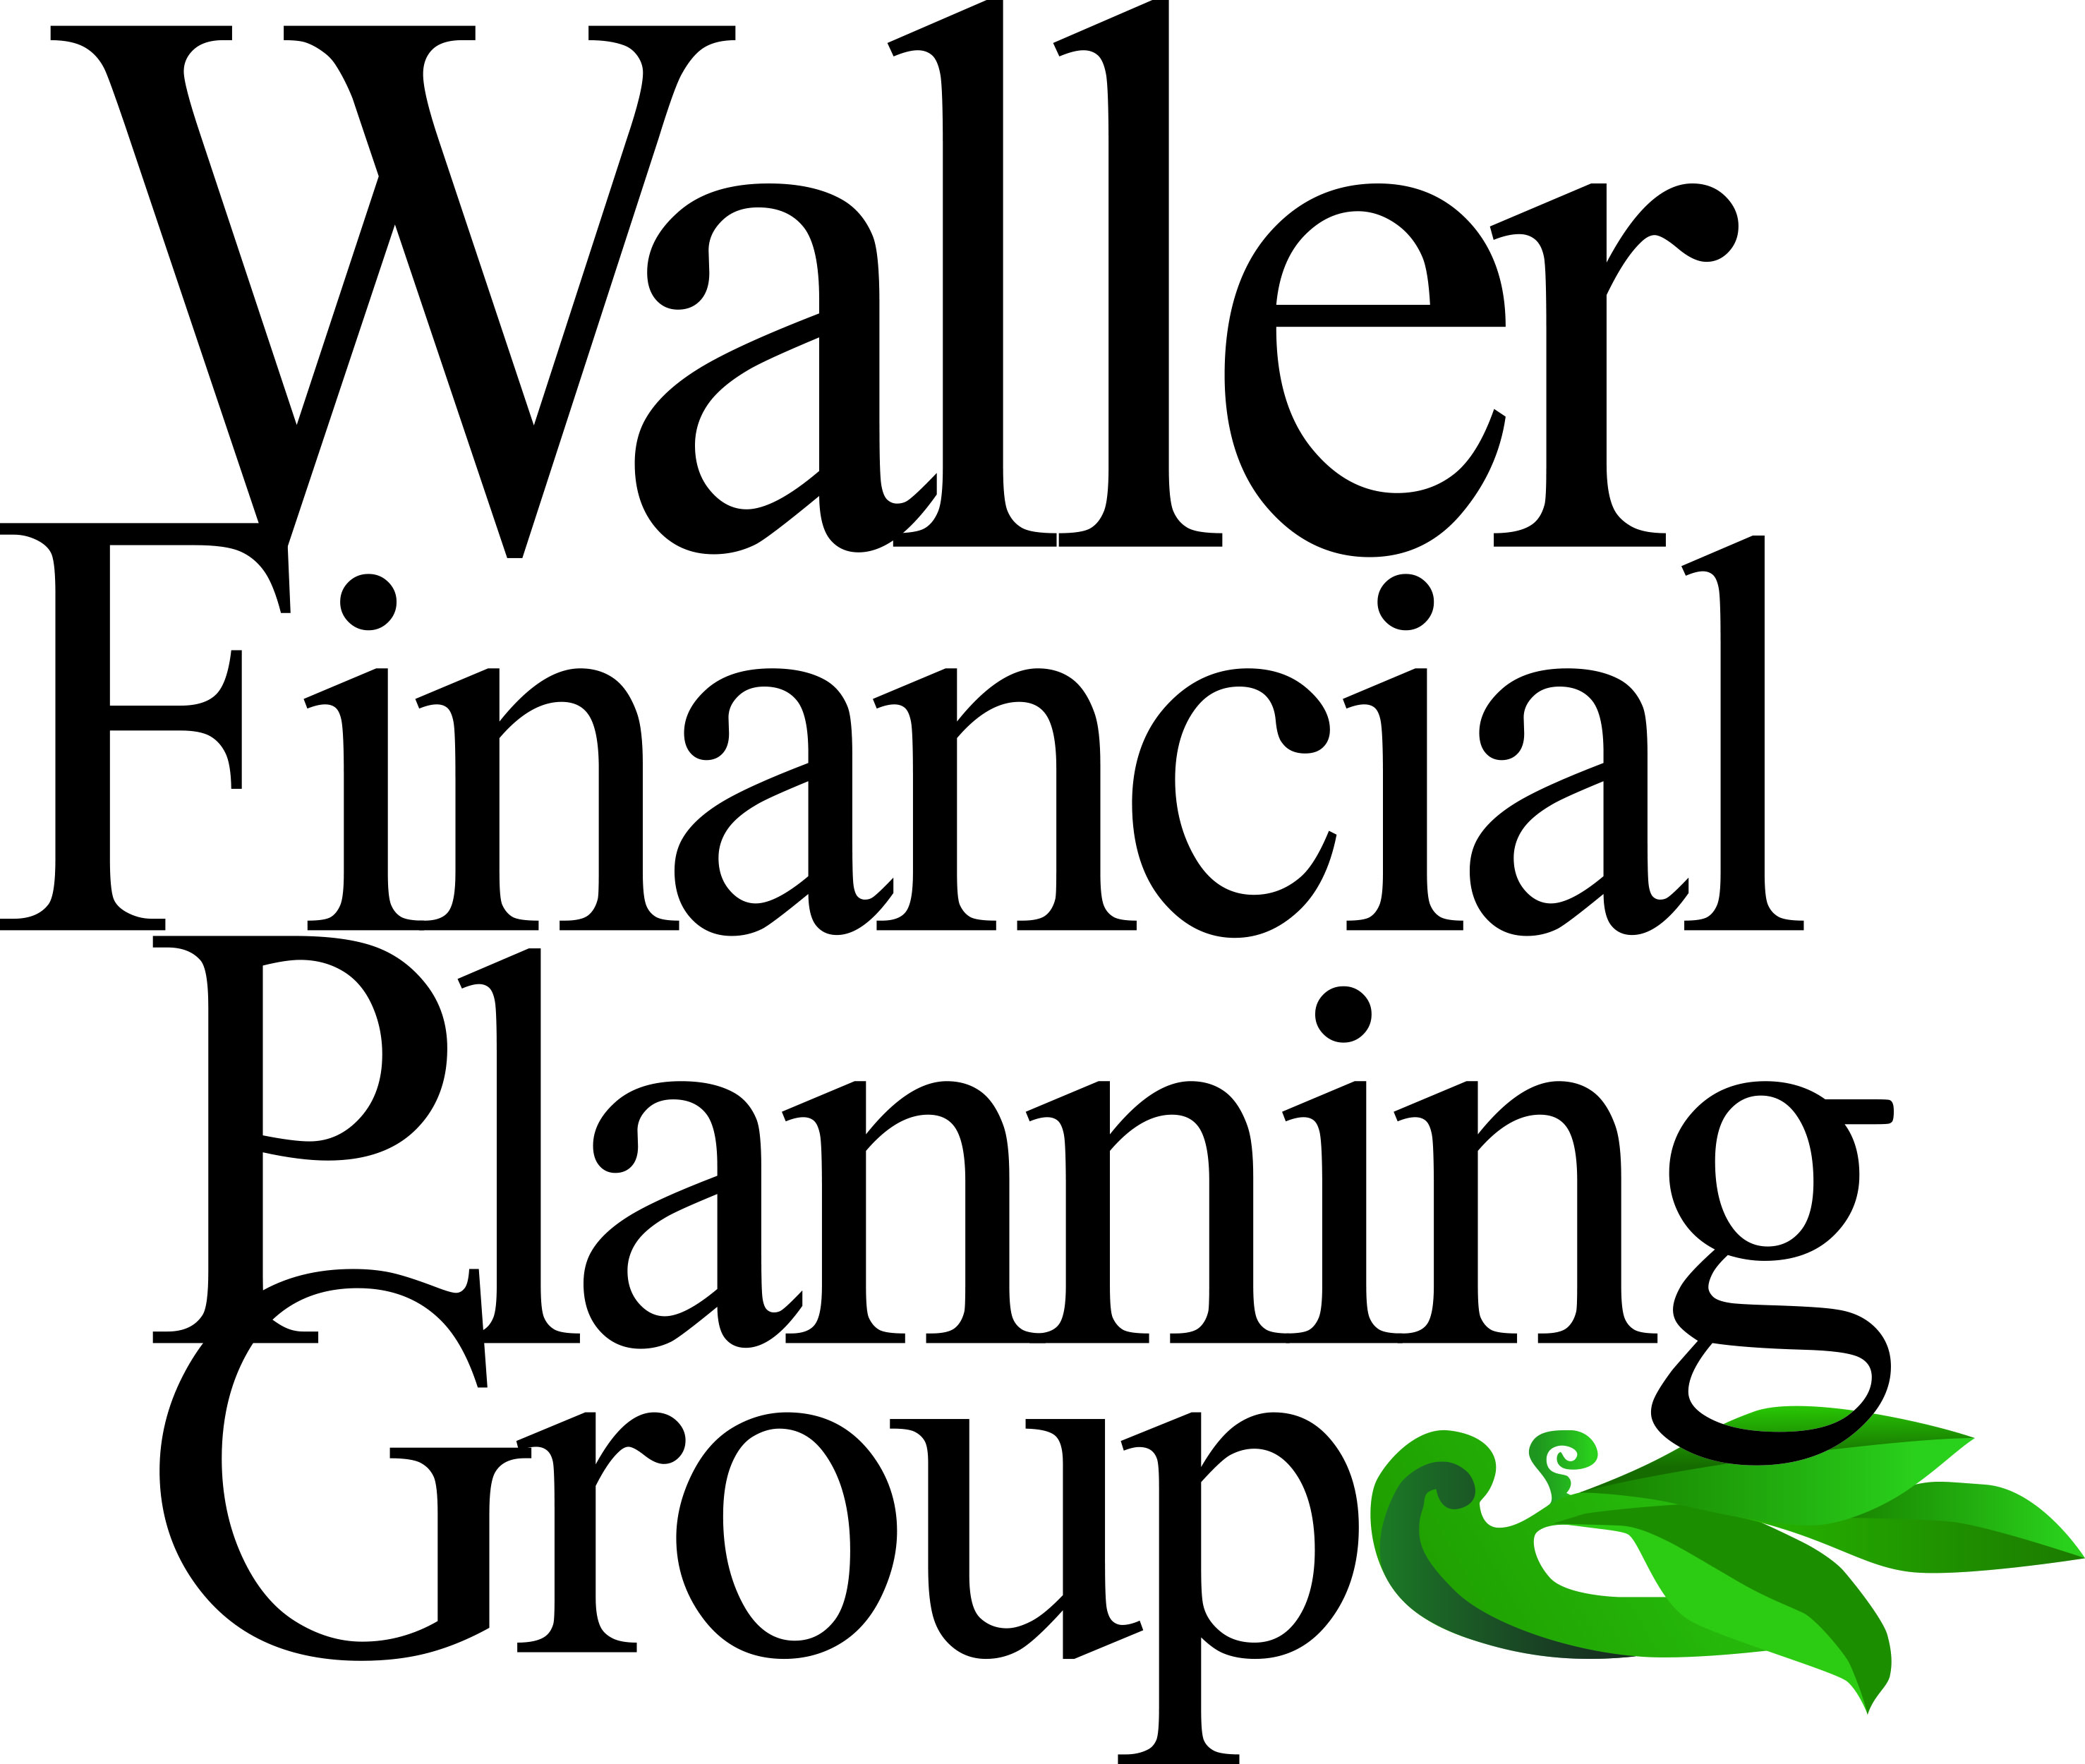 Waller Financial